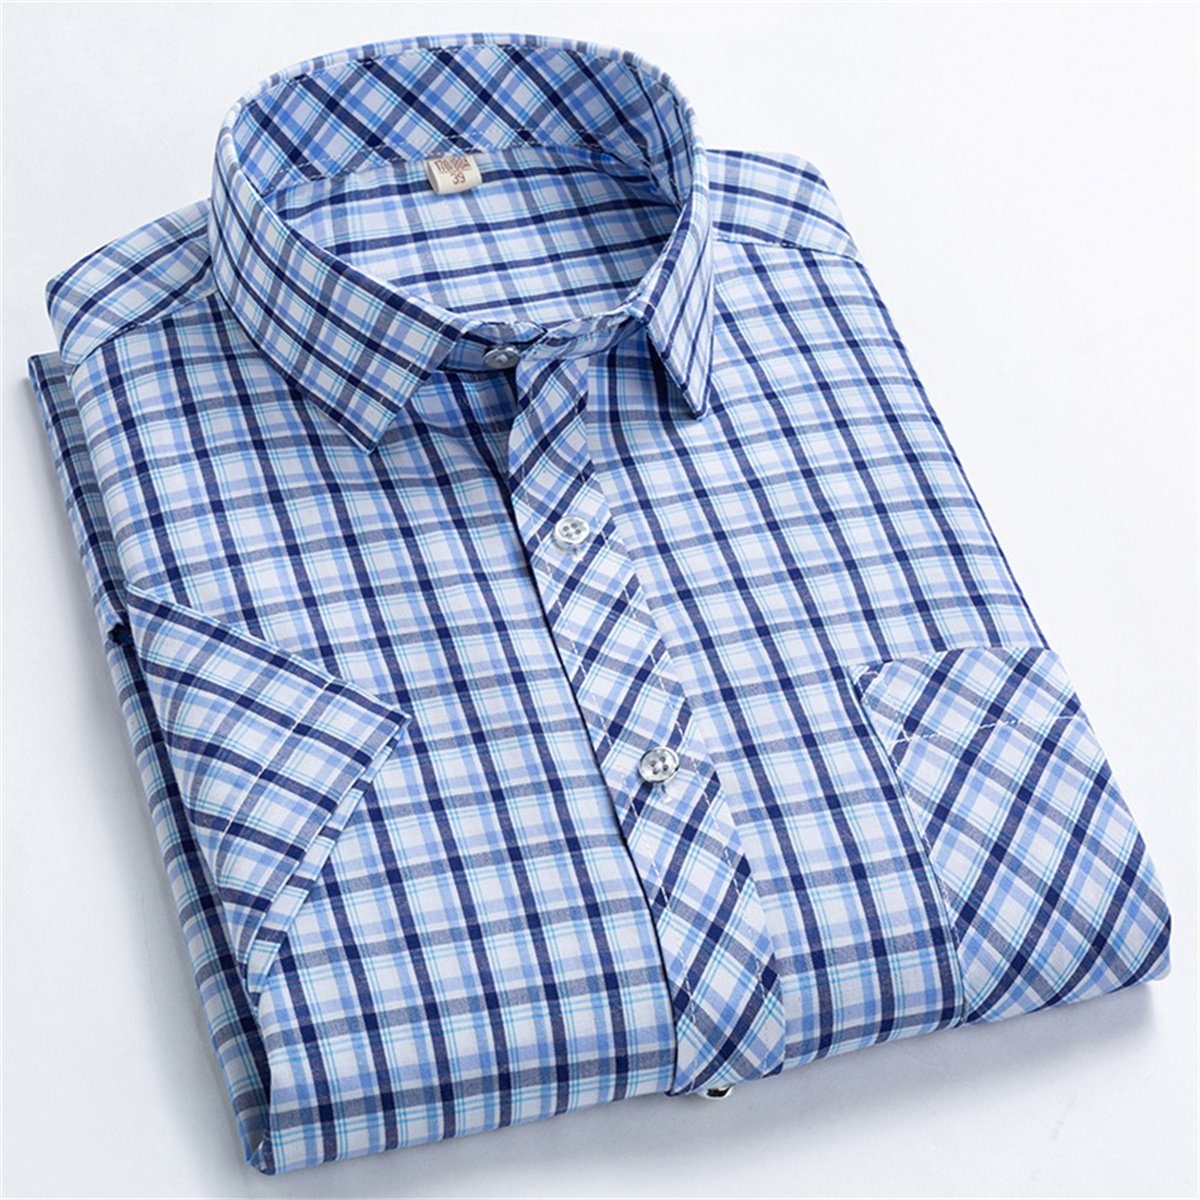 Discaver Trachtenhemd Herrenhemd, reguläre Passform, kurzärmlig, lässiges Popeline-Hemd azurblau